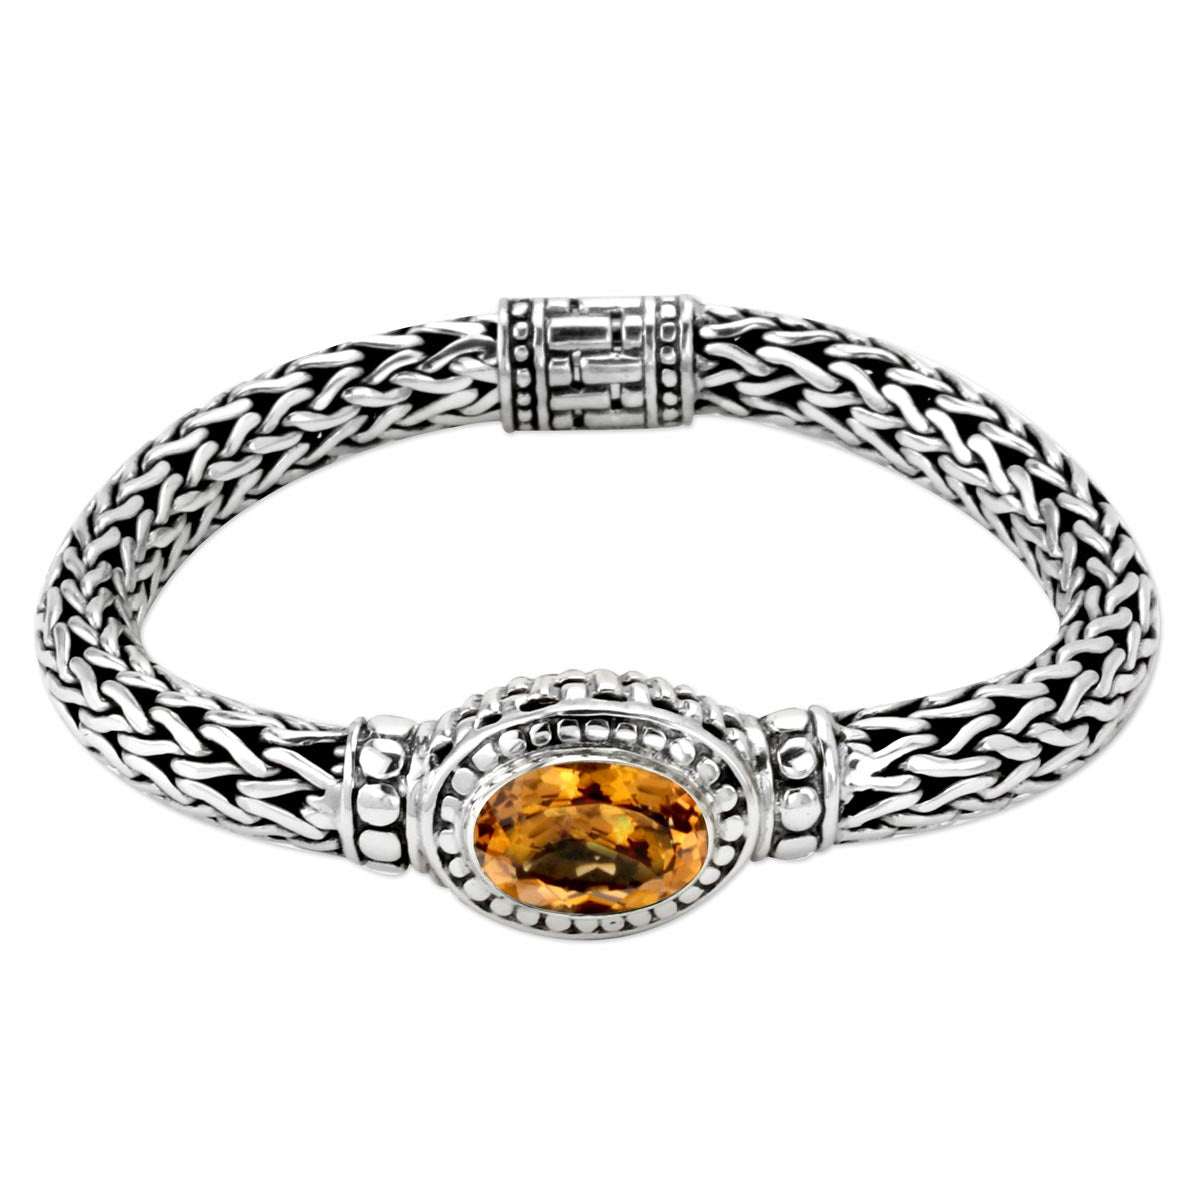 Bali Sterling Silver And Citrine Bracelet 342776